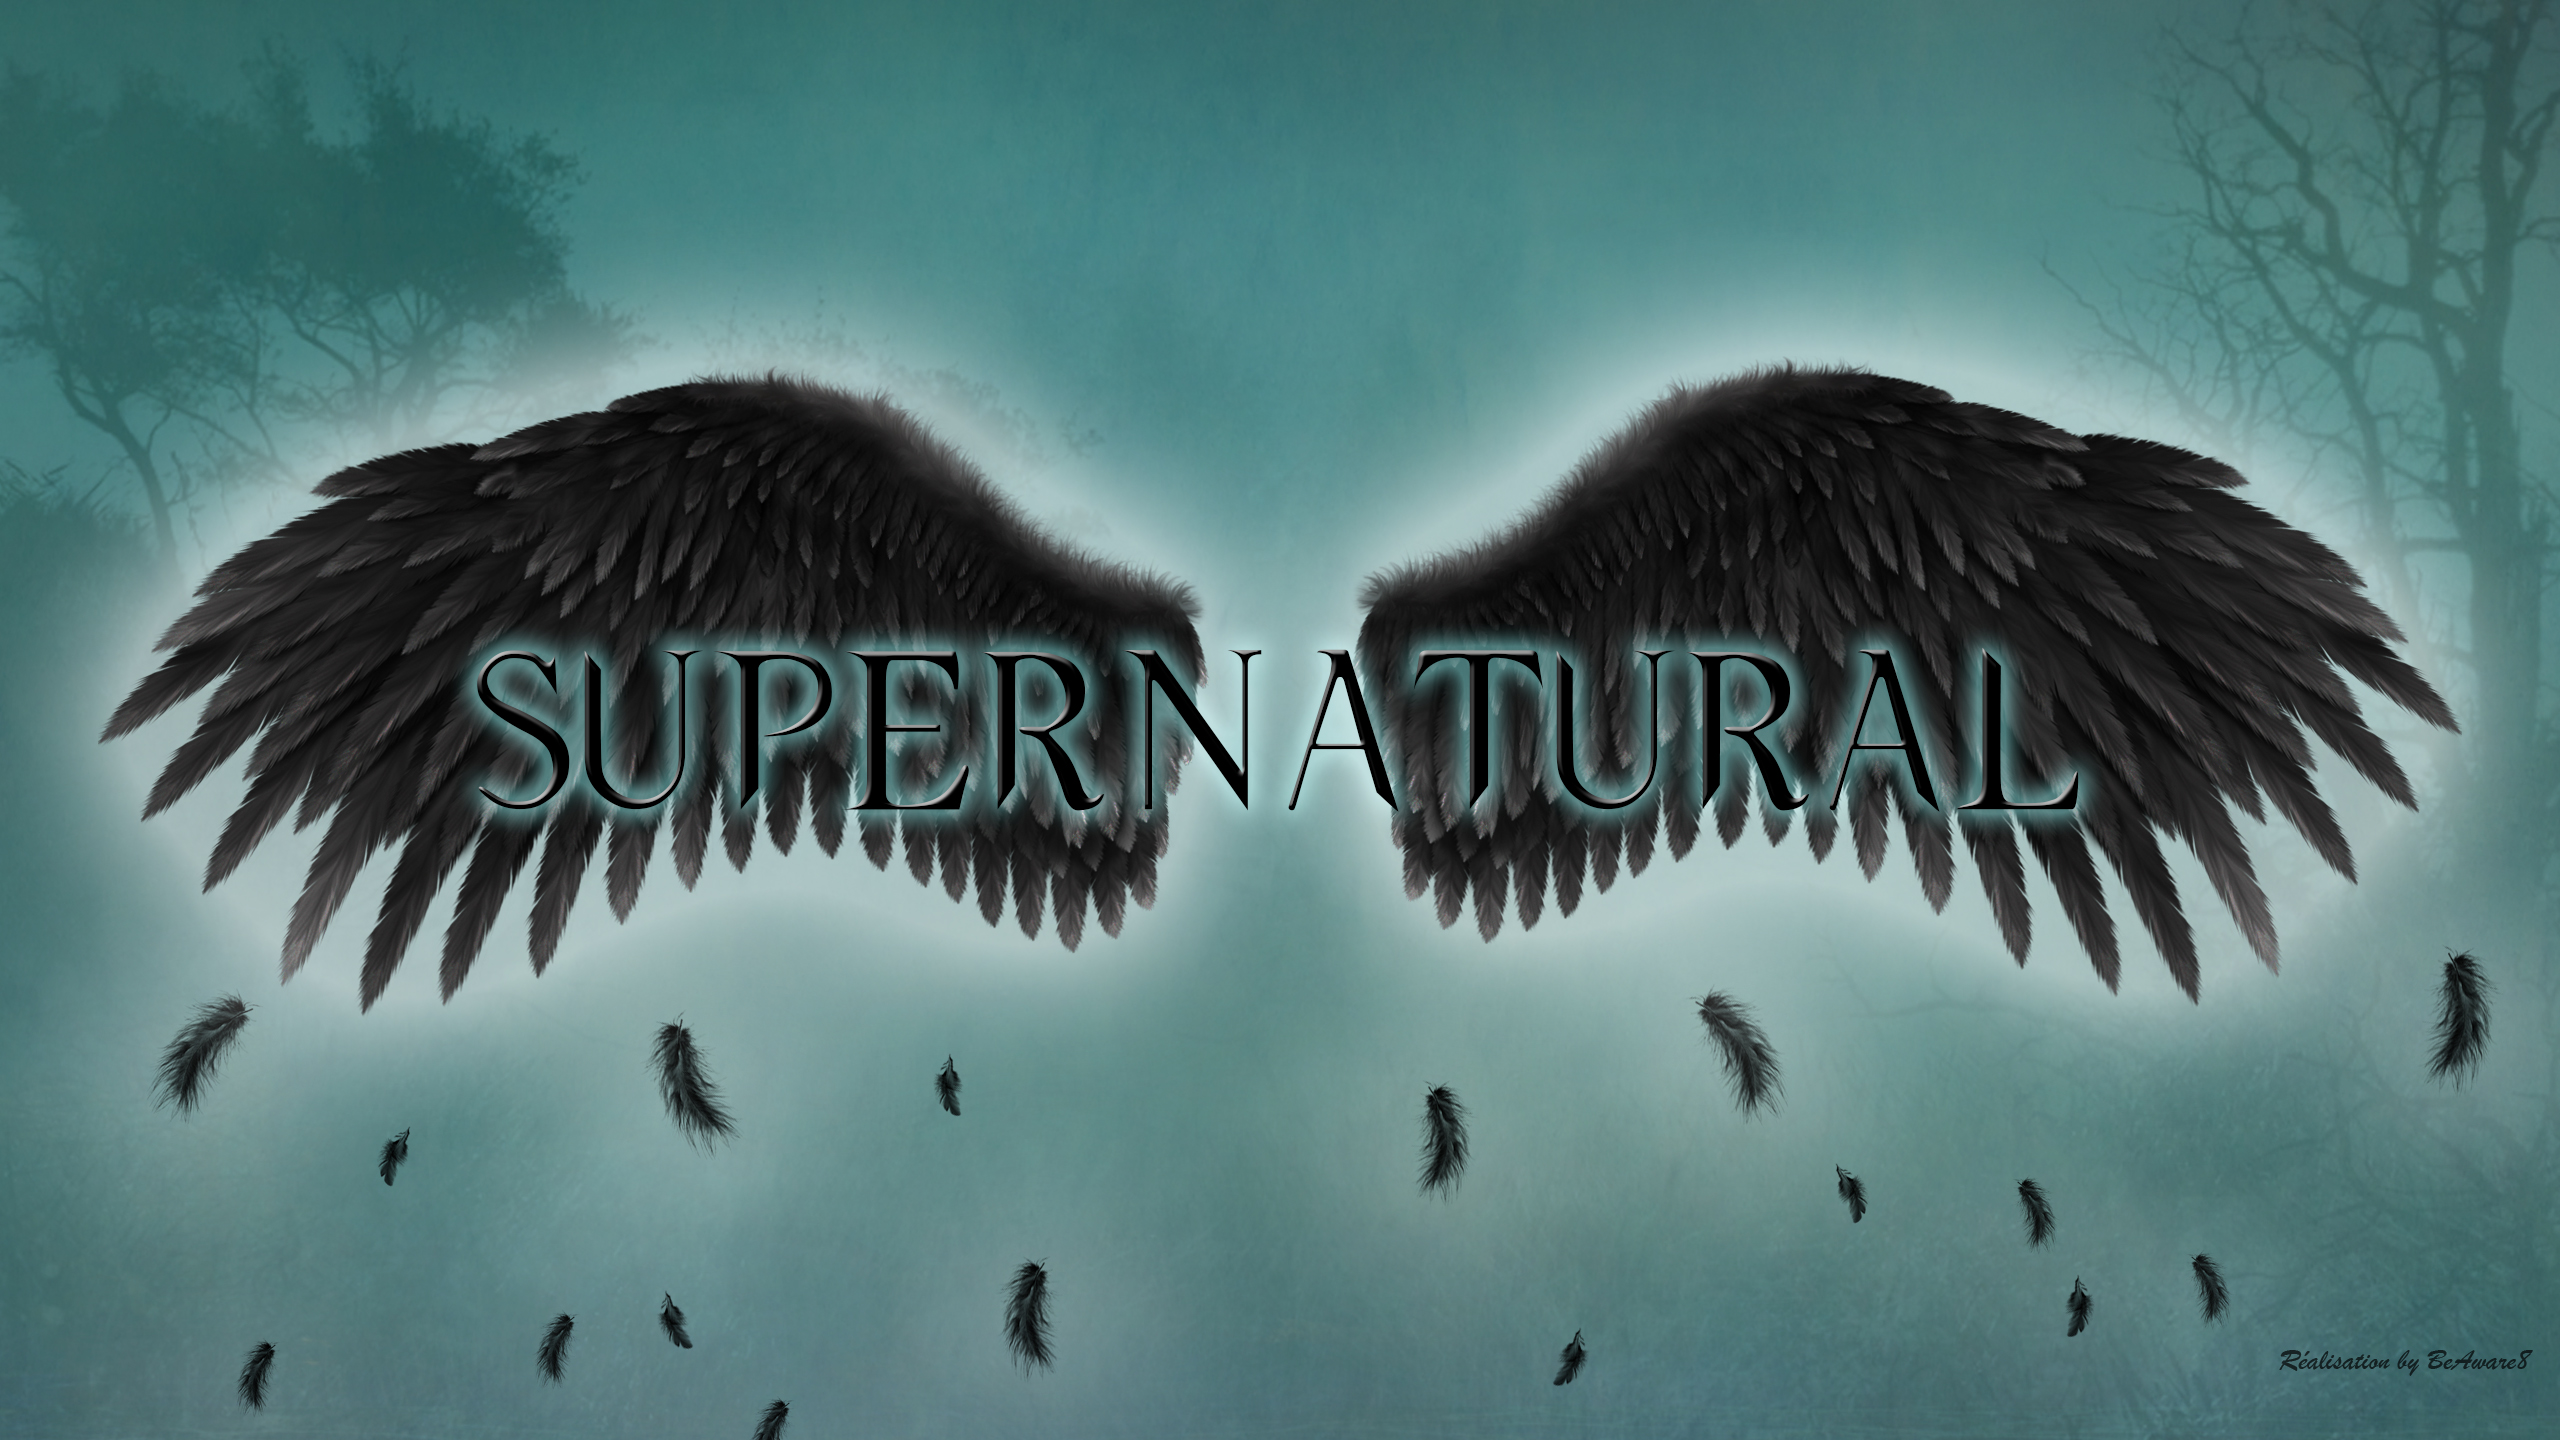 Supernatural - the fallen angel wings by BeAware8 on DeviantArt